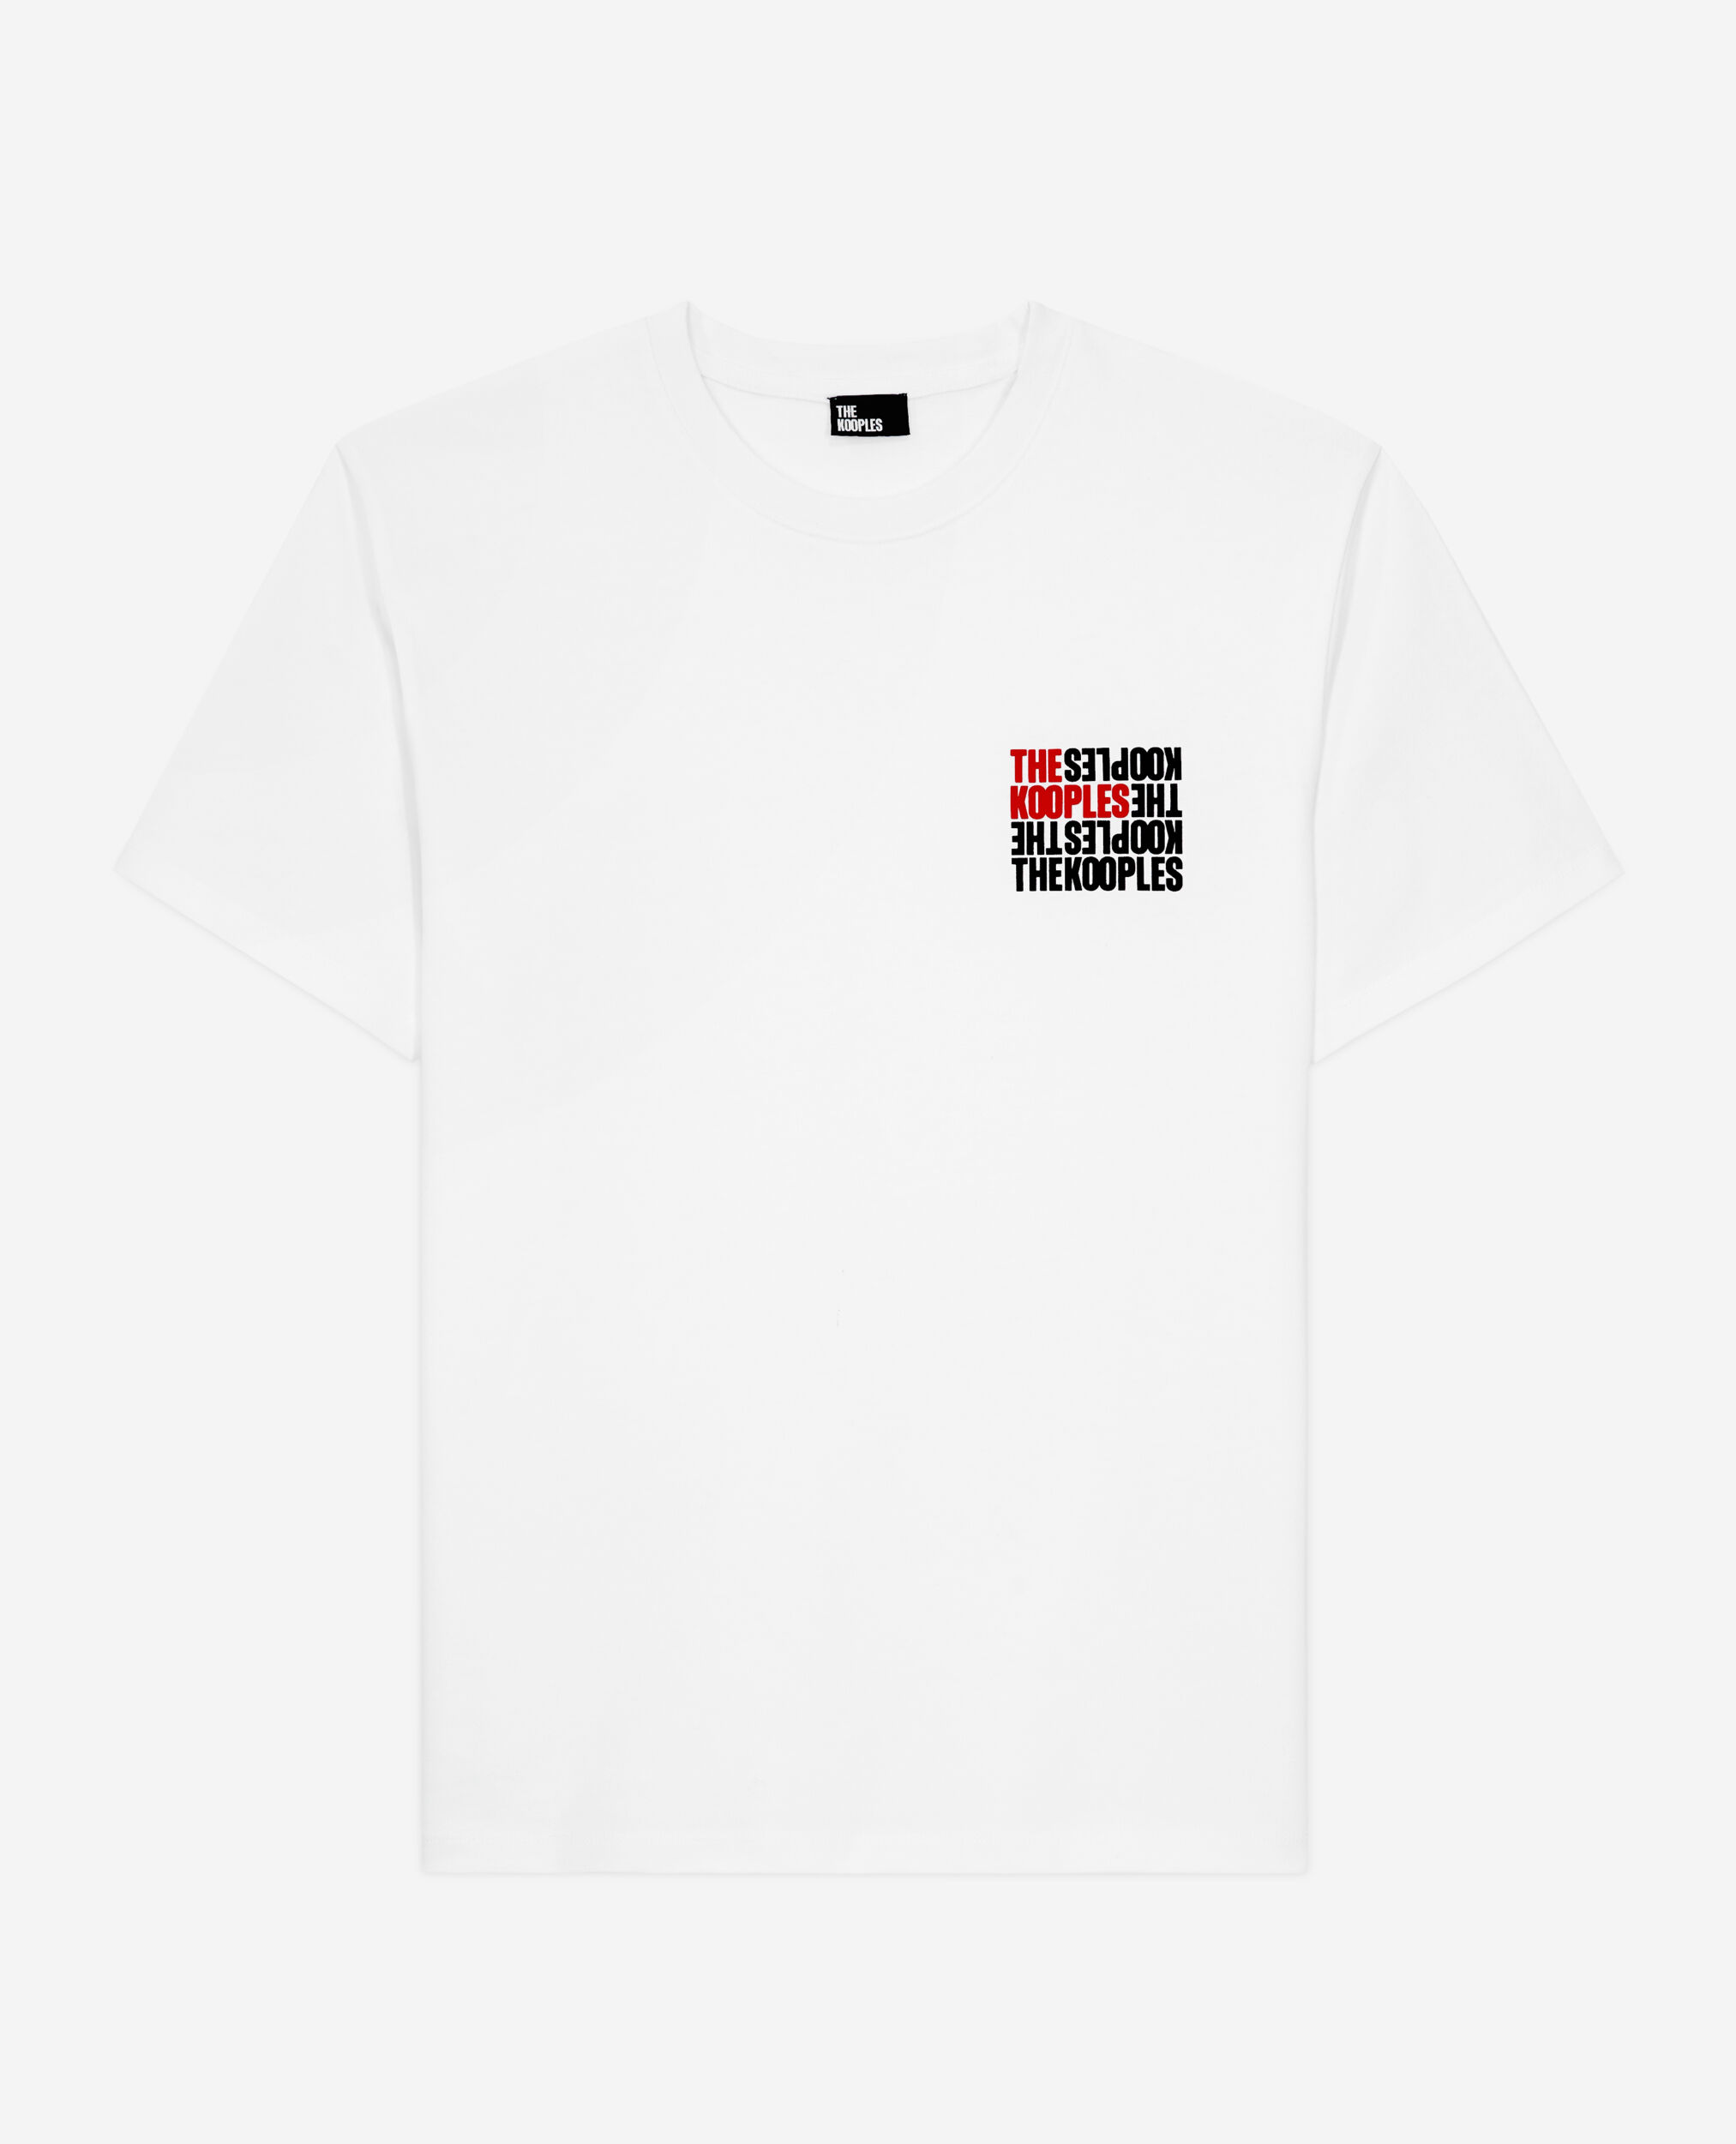 Men's the kooples white logo t-shirt, WHITE, hi-res image number null